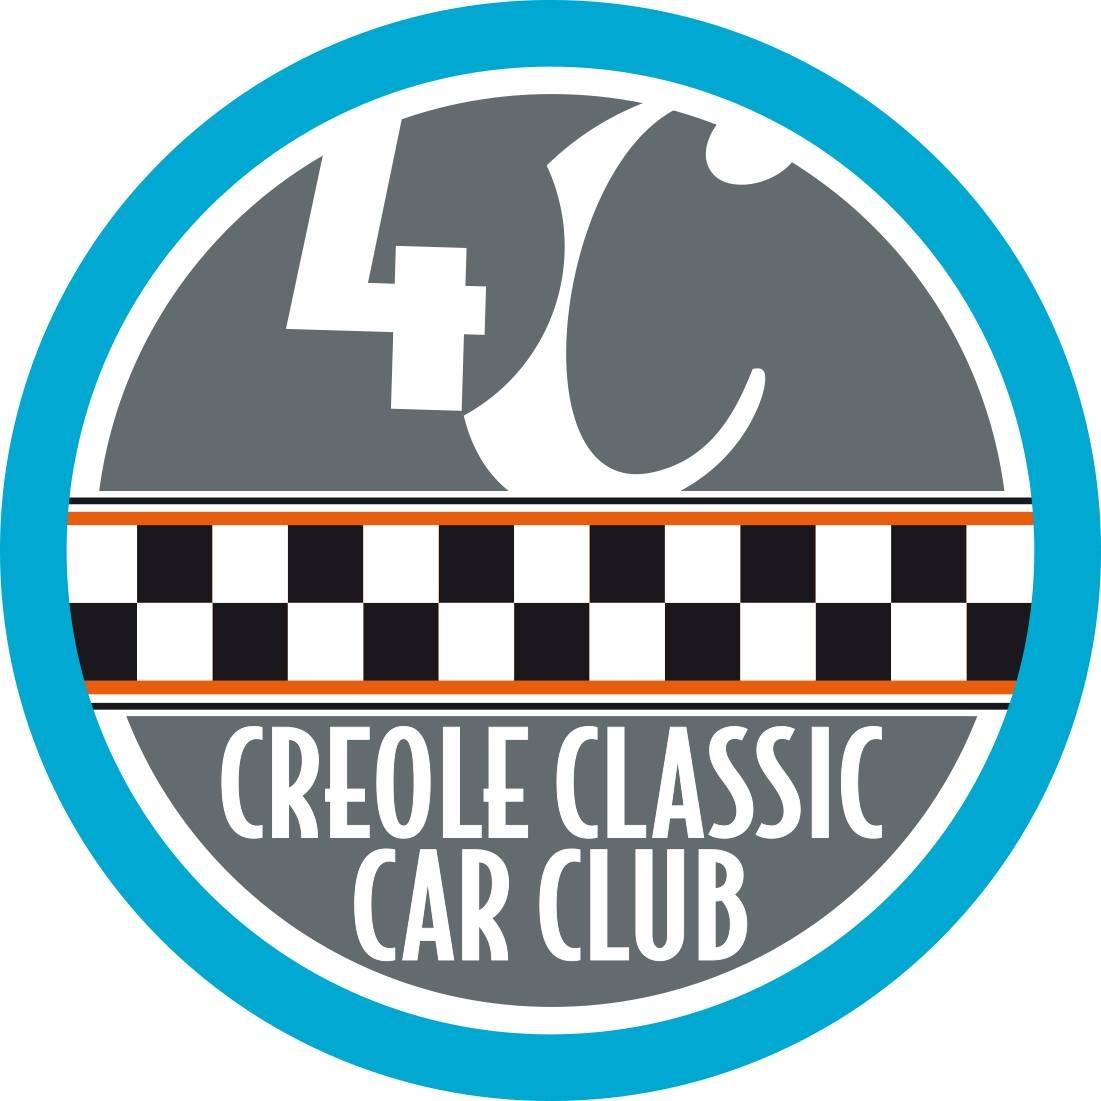 CREOLE CLASSIC CAR CLUB